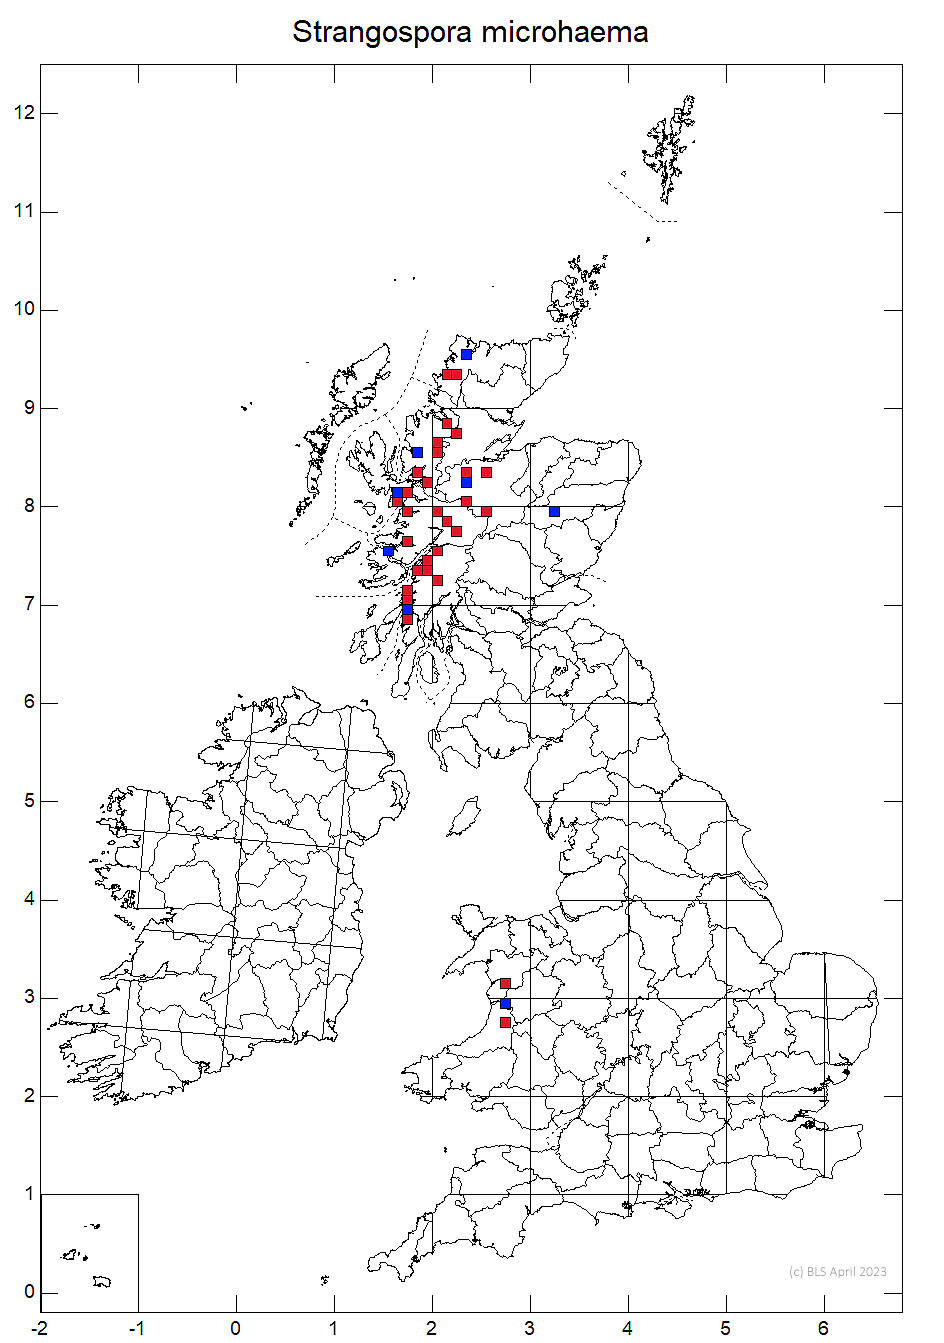 Strangospora microhaema 10km sq distribution map